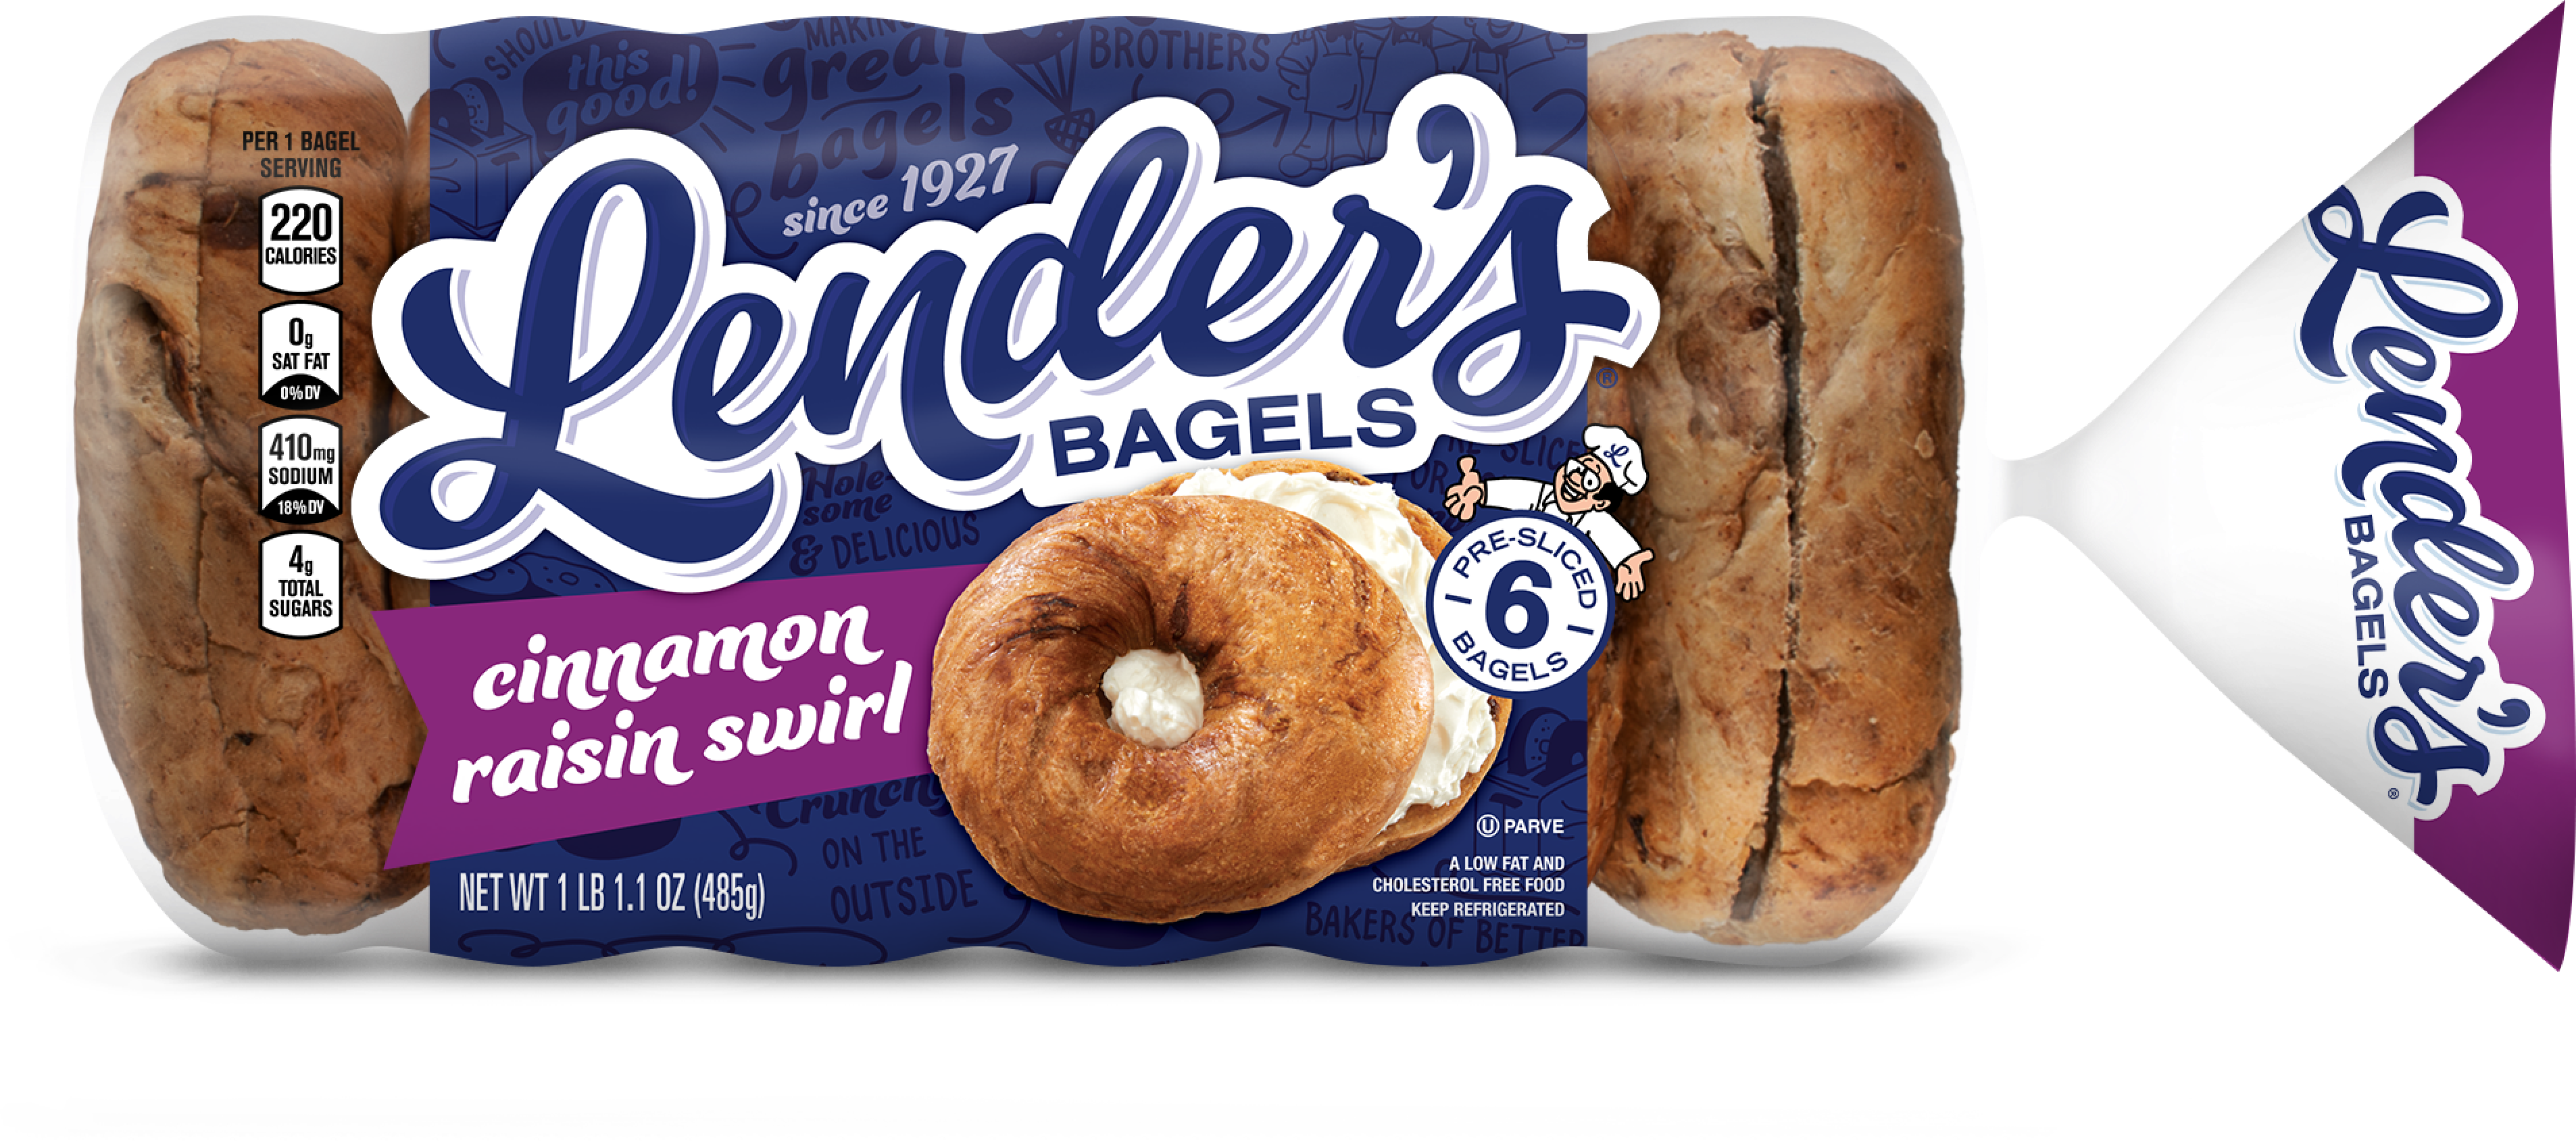 Lender&#039;s cinnamon raisin swirl bagels